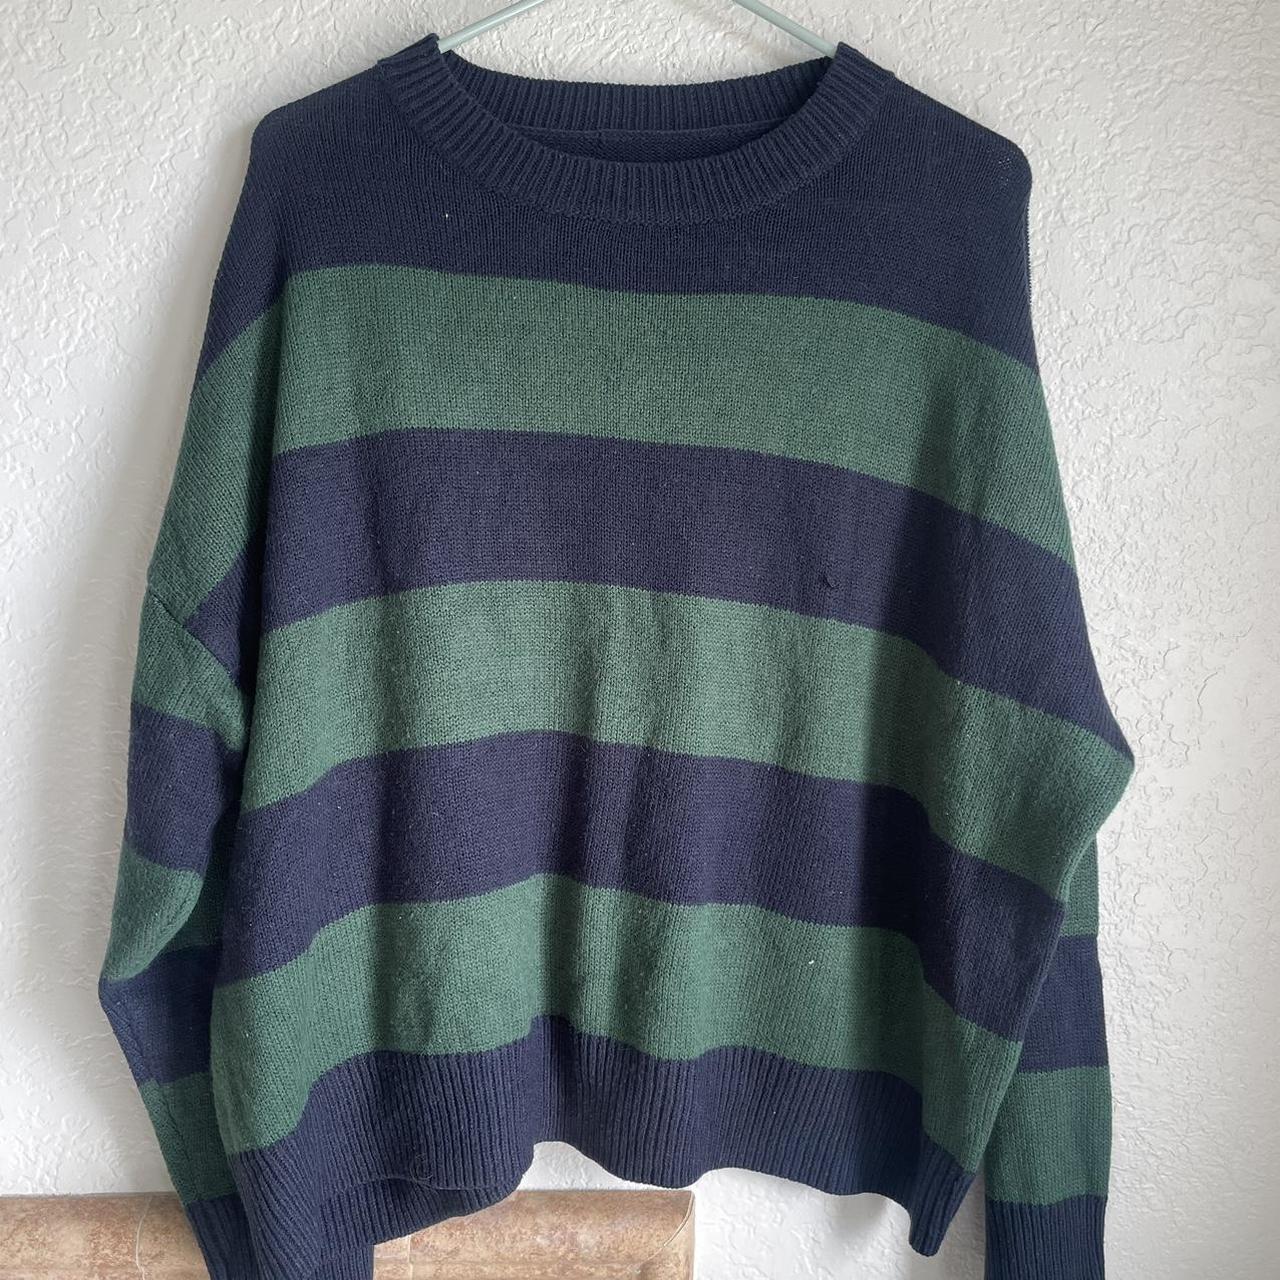 Green & Blue striped sweater! (The Tate Sweater) -... - Depop